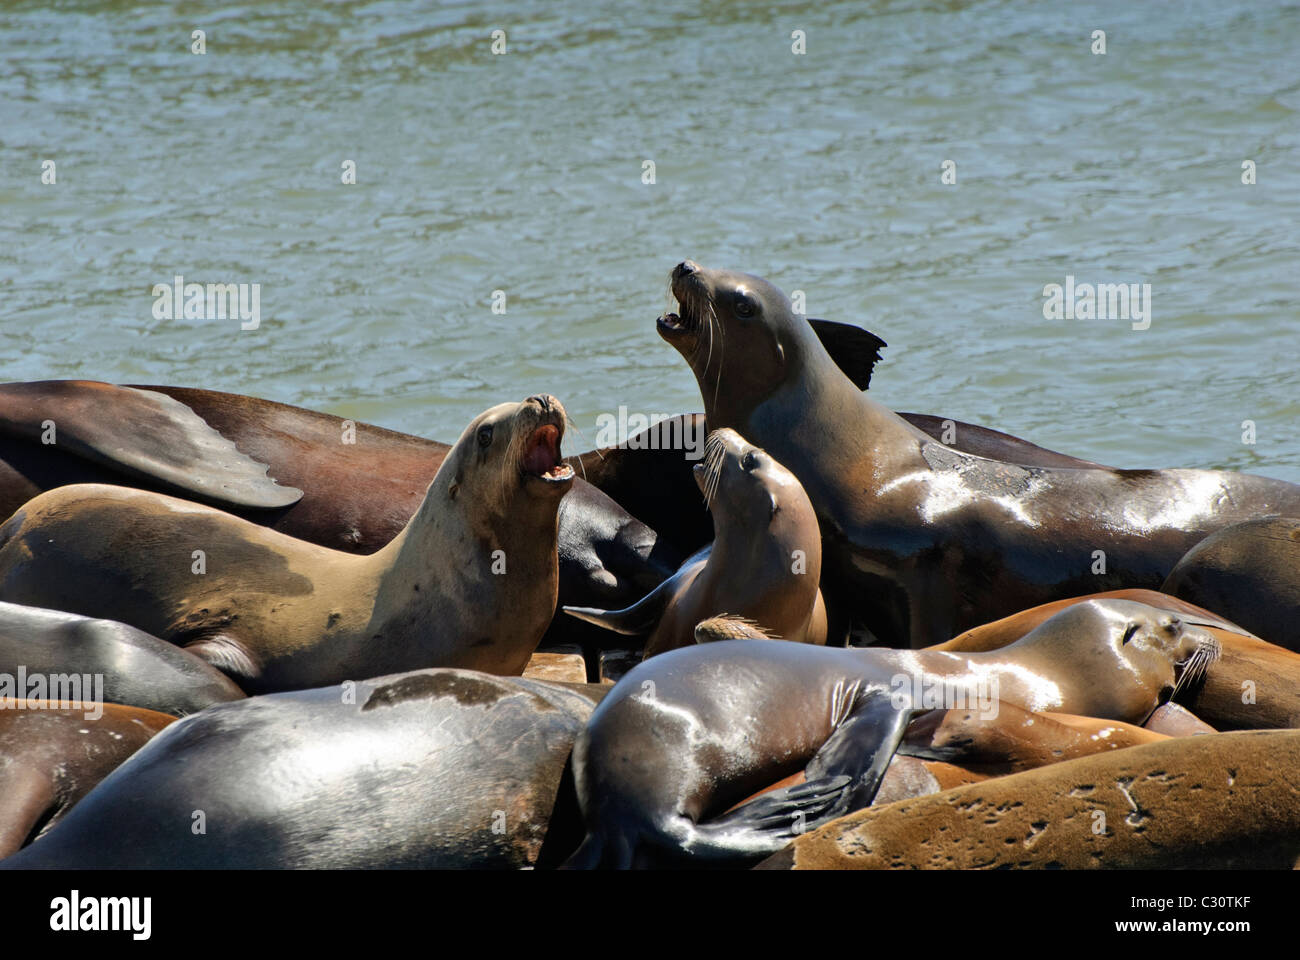 Large group of California Sea Lions (Zalophus californianus) on a dock. Stock Photo